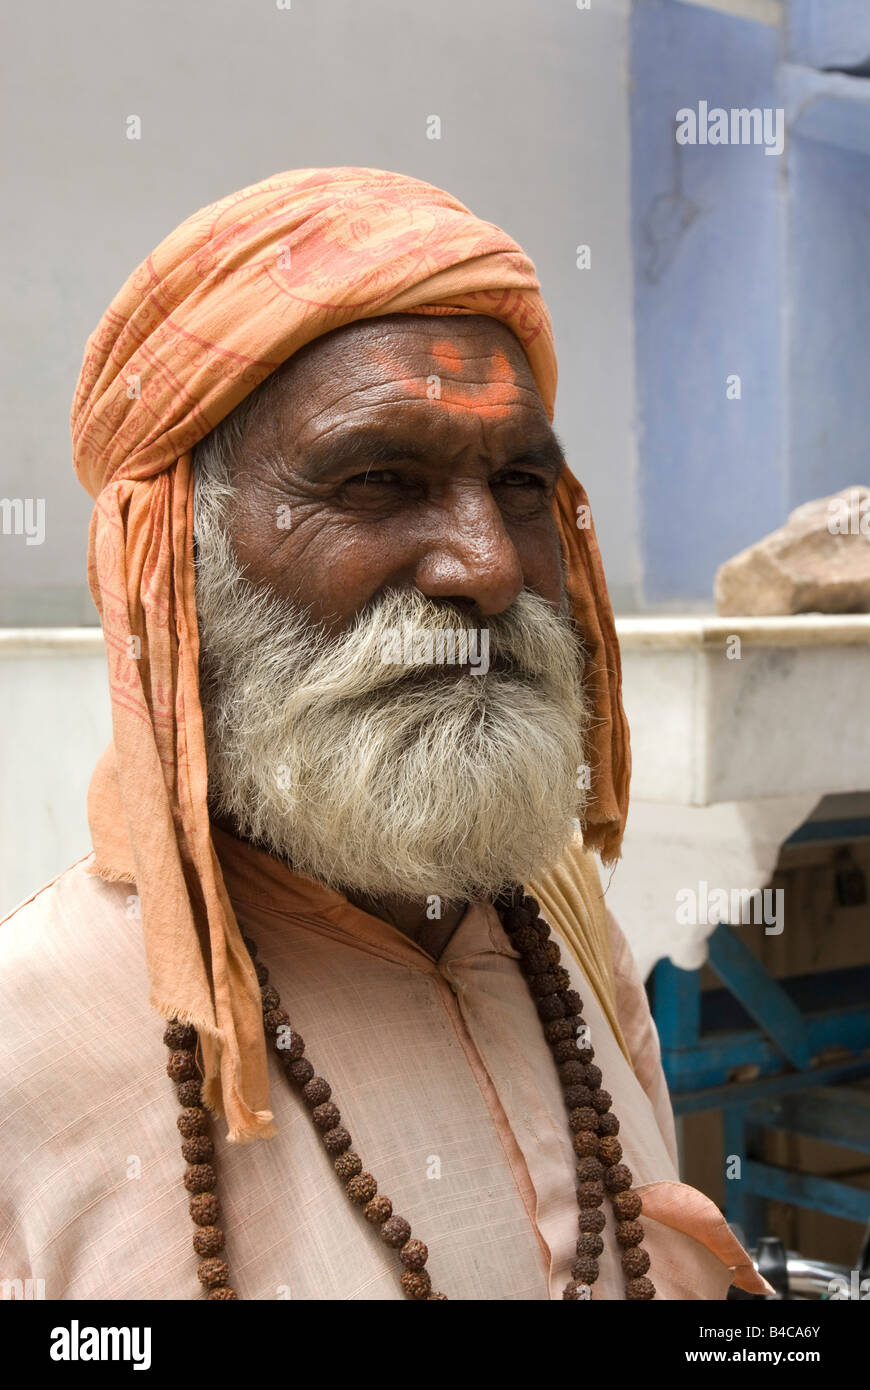 India Rajasthan Pushkar mature man in traditional head dress Stock Photo